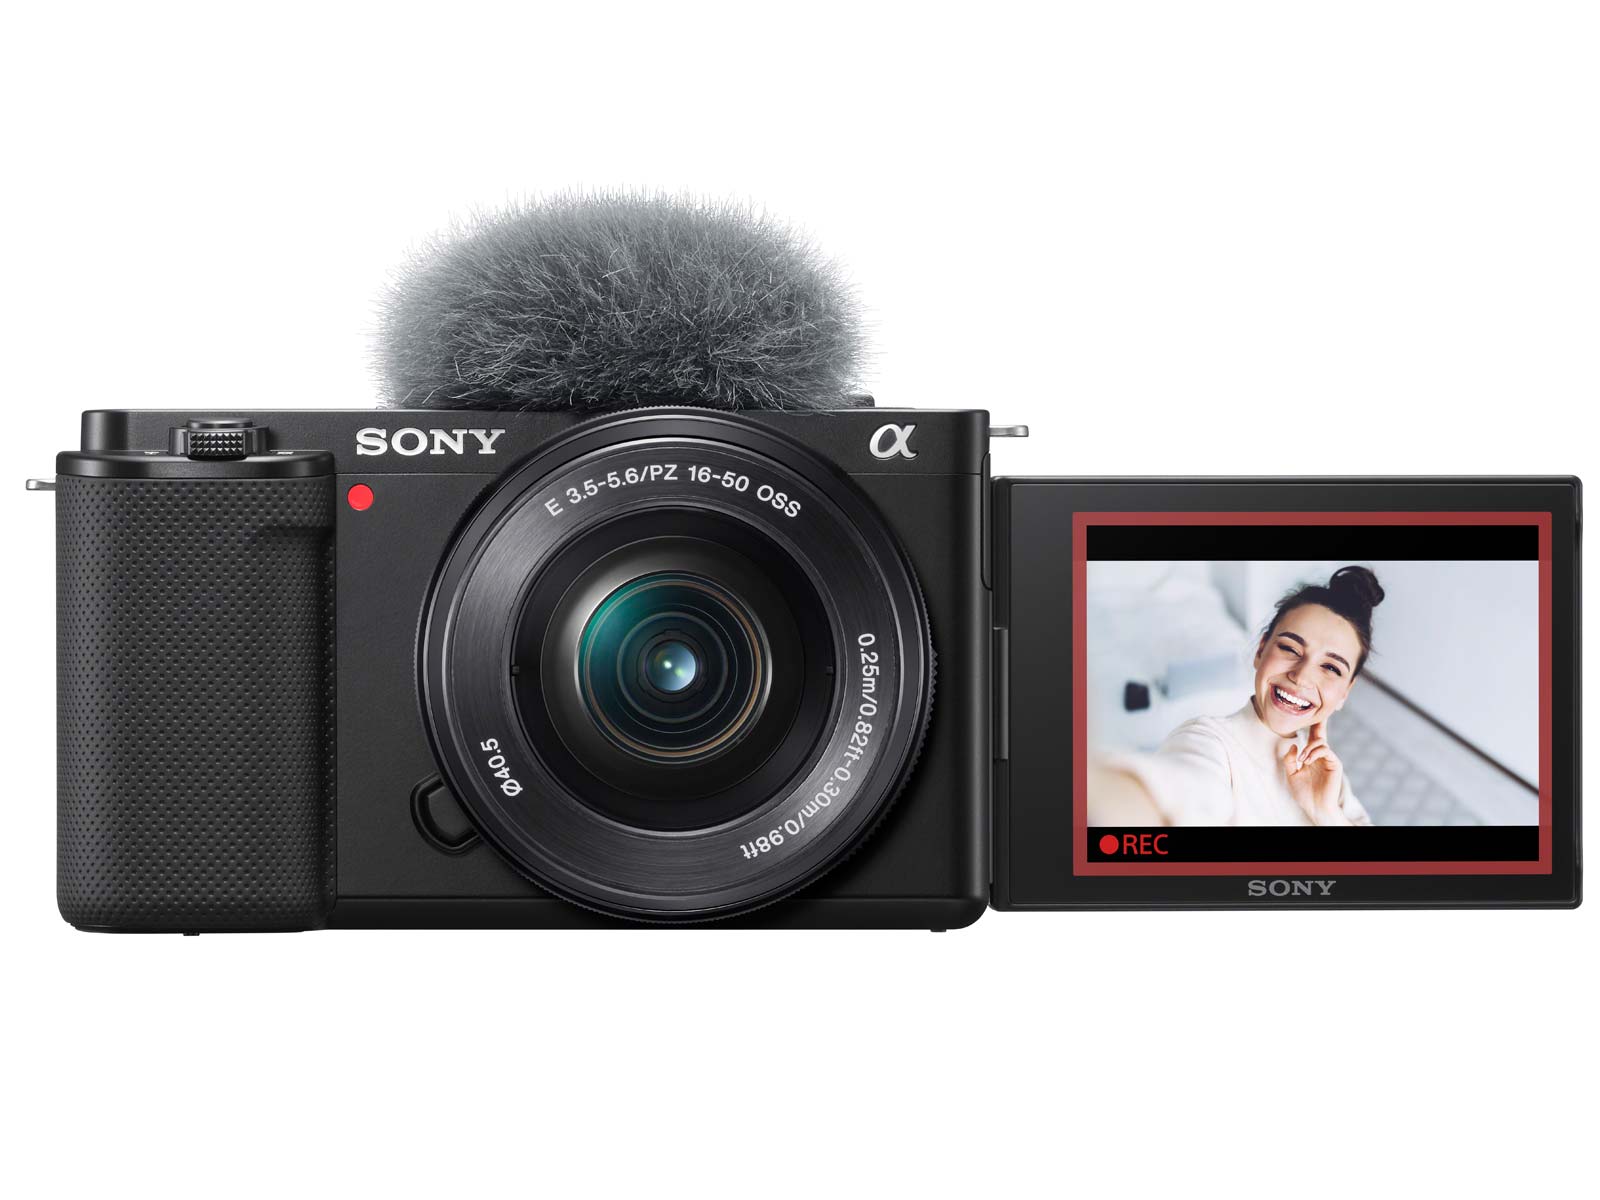 Sony ZV-E10 Camera and Sony E 35mm F1.8 OSS Lens